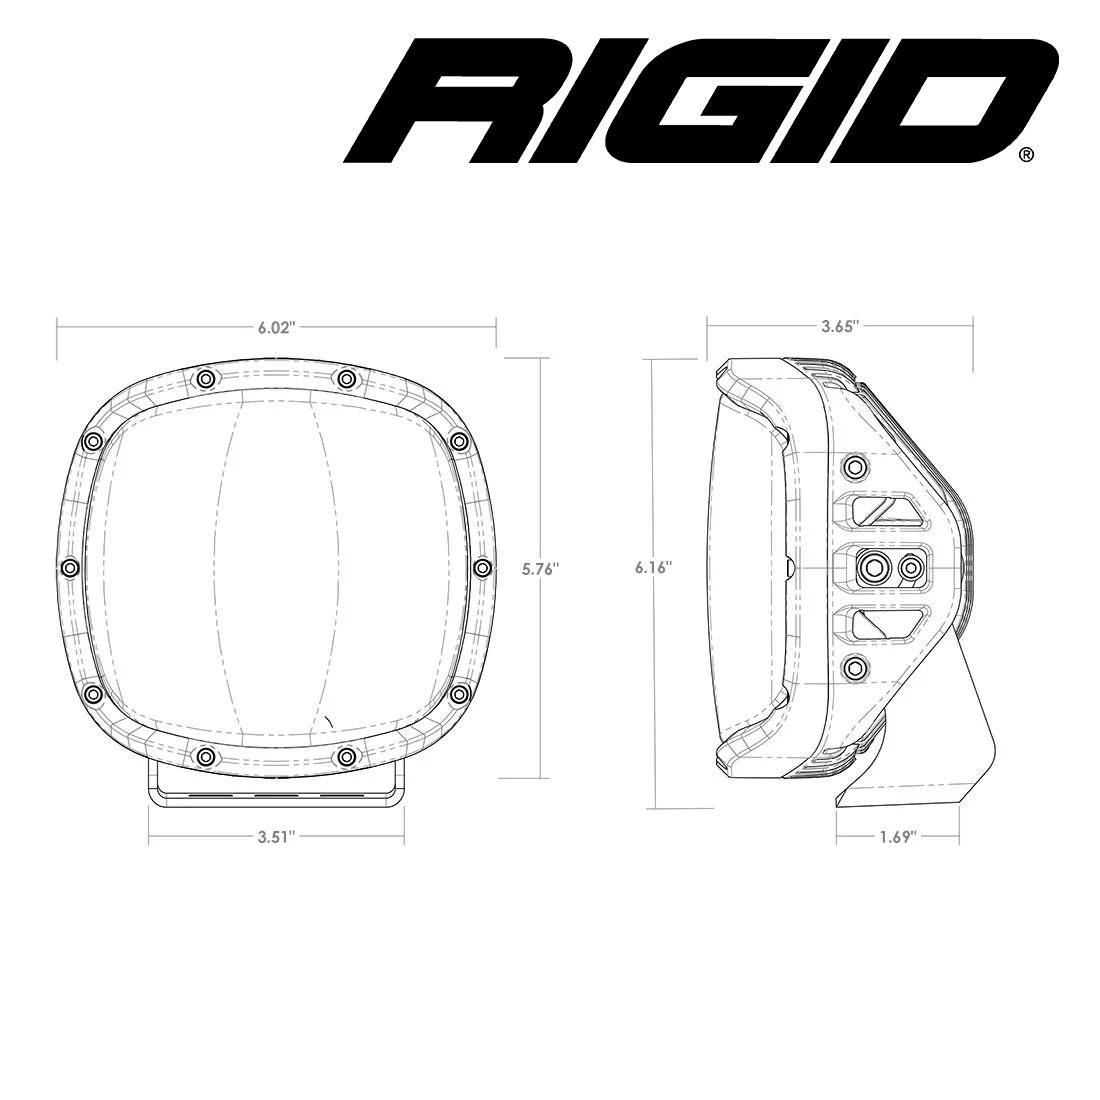 Rigid Adapt XP Extreme Powersports LED Light - Single Lighting Rigid Industries design